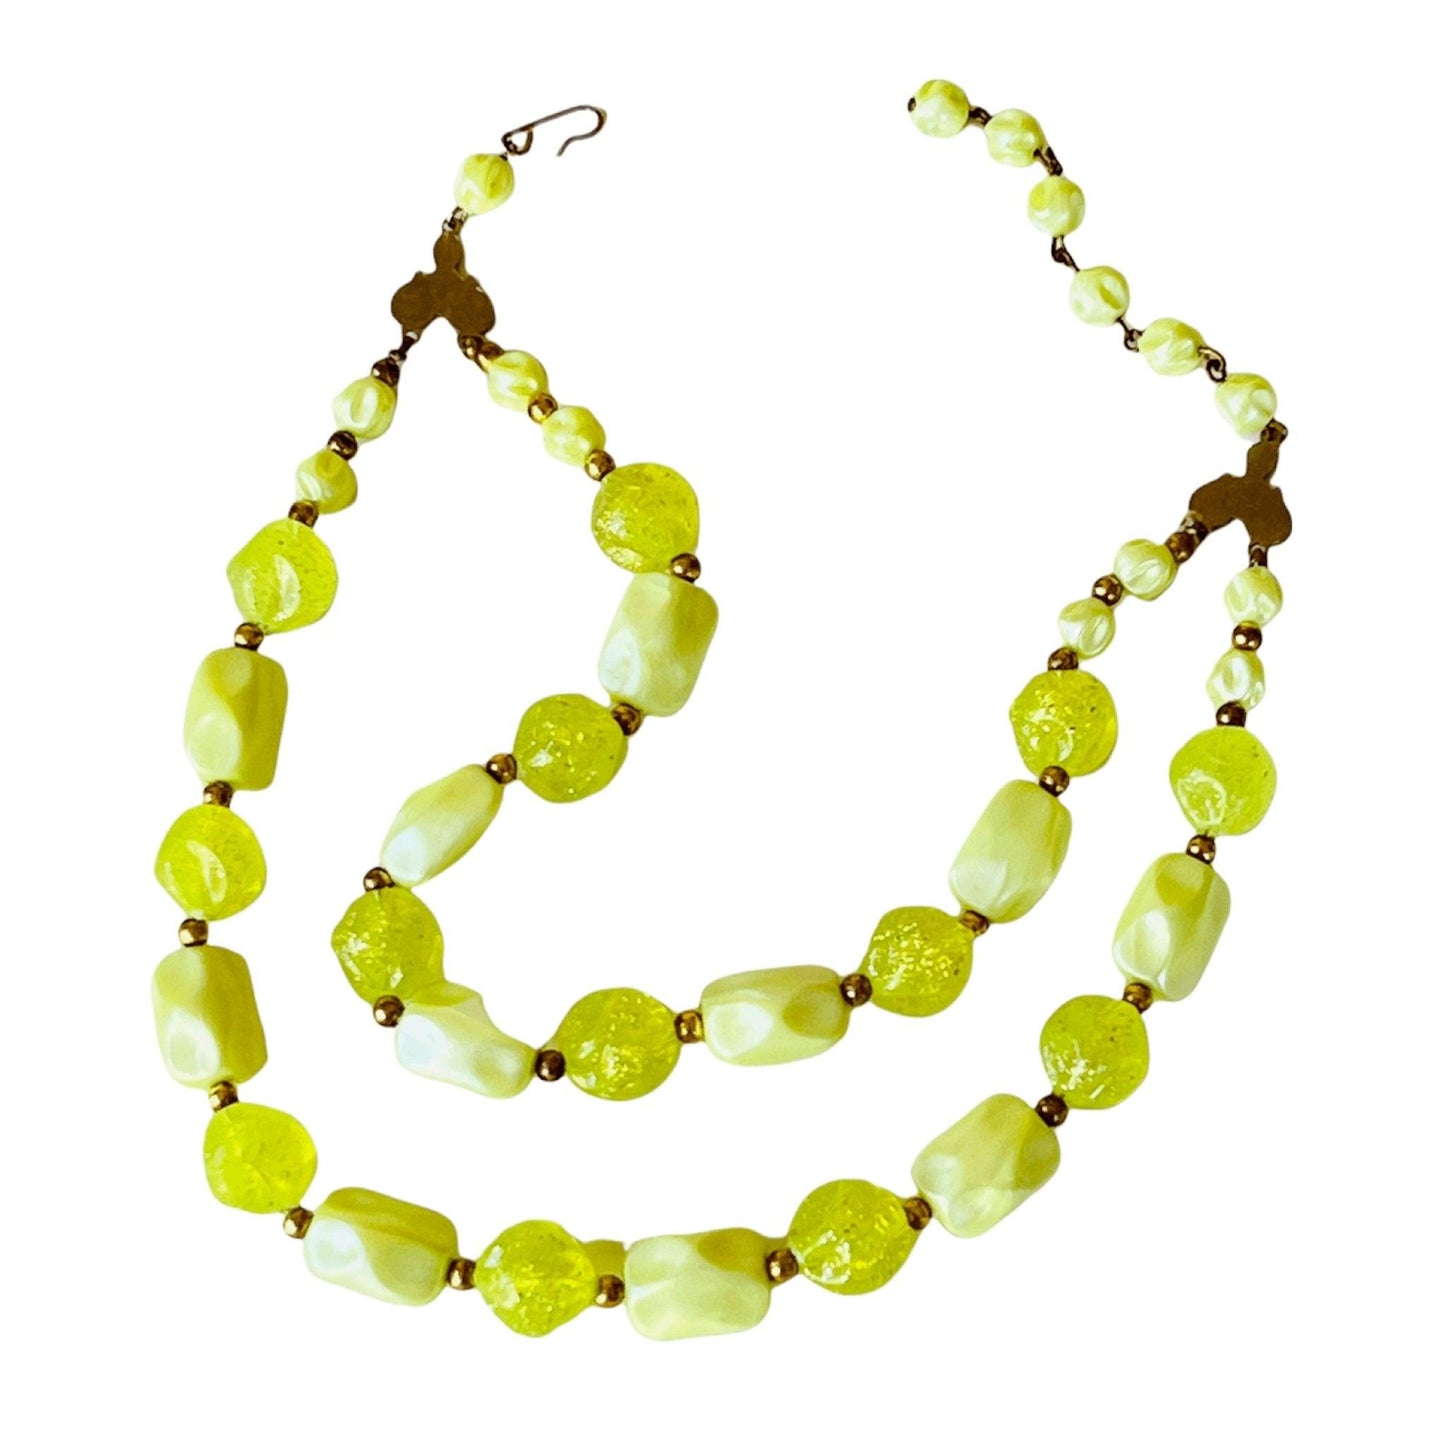 Vintage Plastic Greenish-yellow Color Bead Necklace